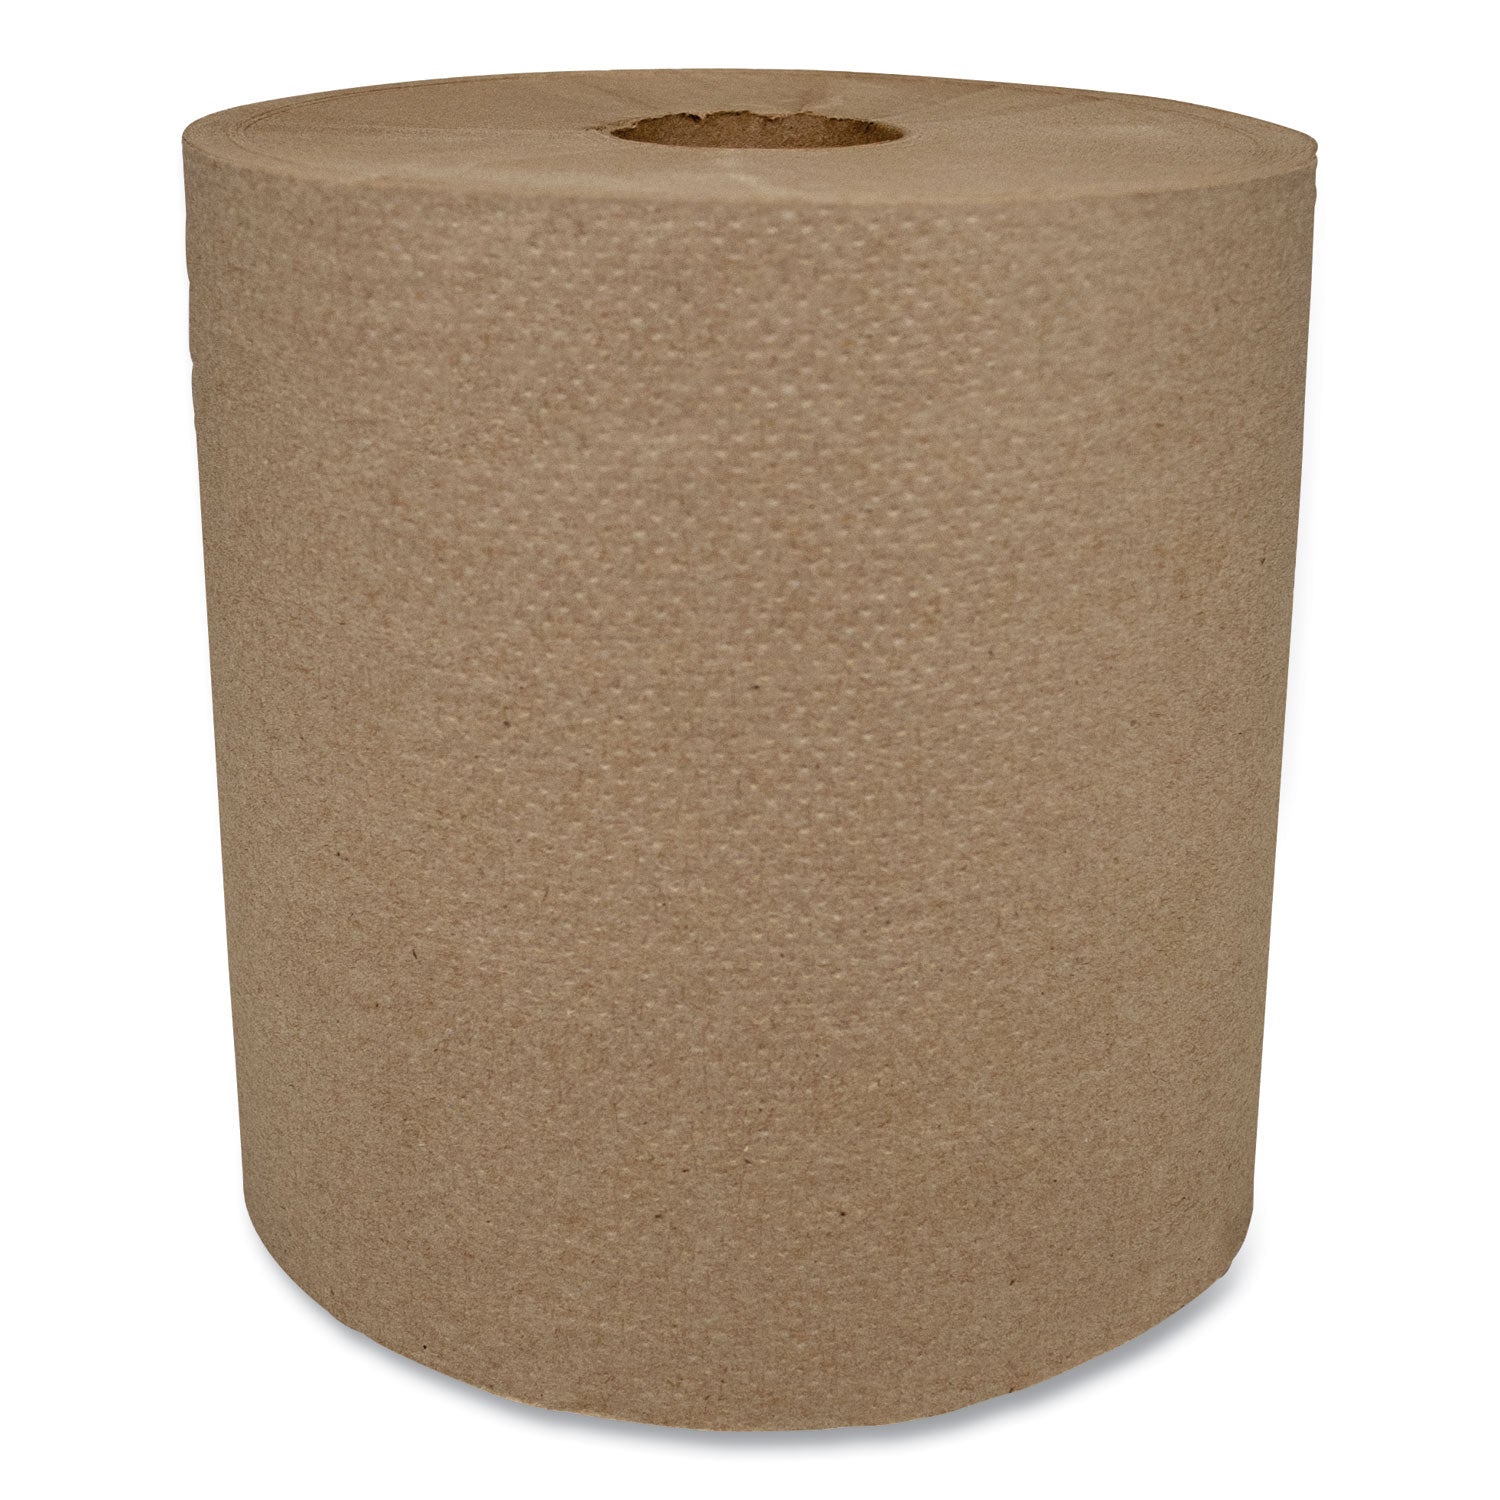 morsoft-universal-roll-towels-1-ply-8-x-700-ft-kraft-6-rolls-carton_mor6700r - 1